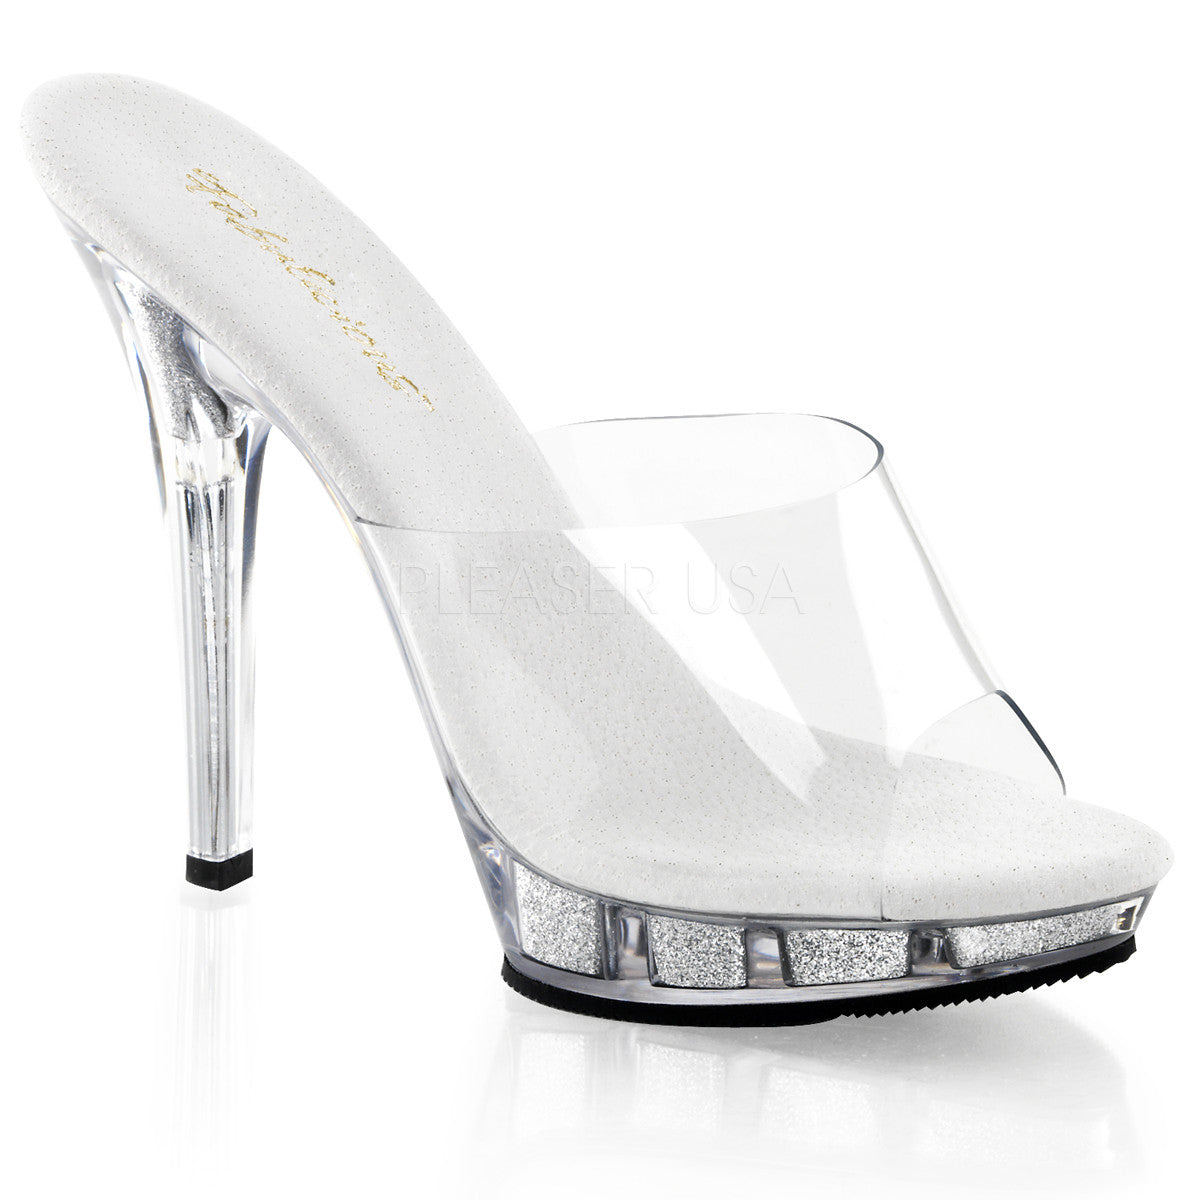 FABULICIOUS LIP-101 Clear-Silver Glitter Platform Slides - Shoecup.com